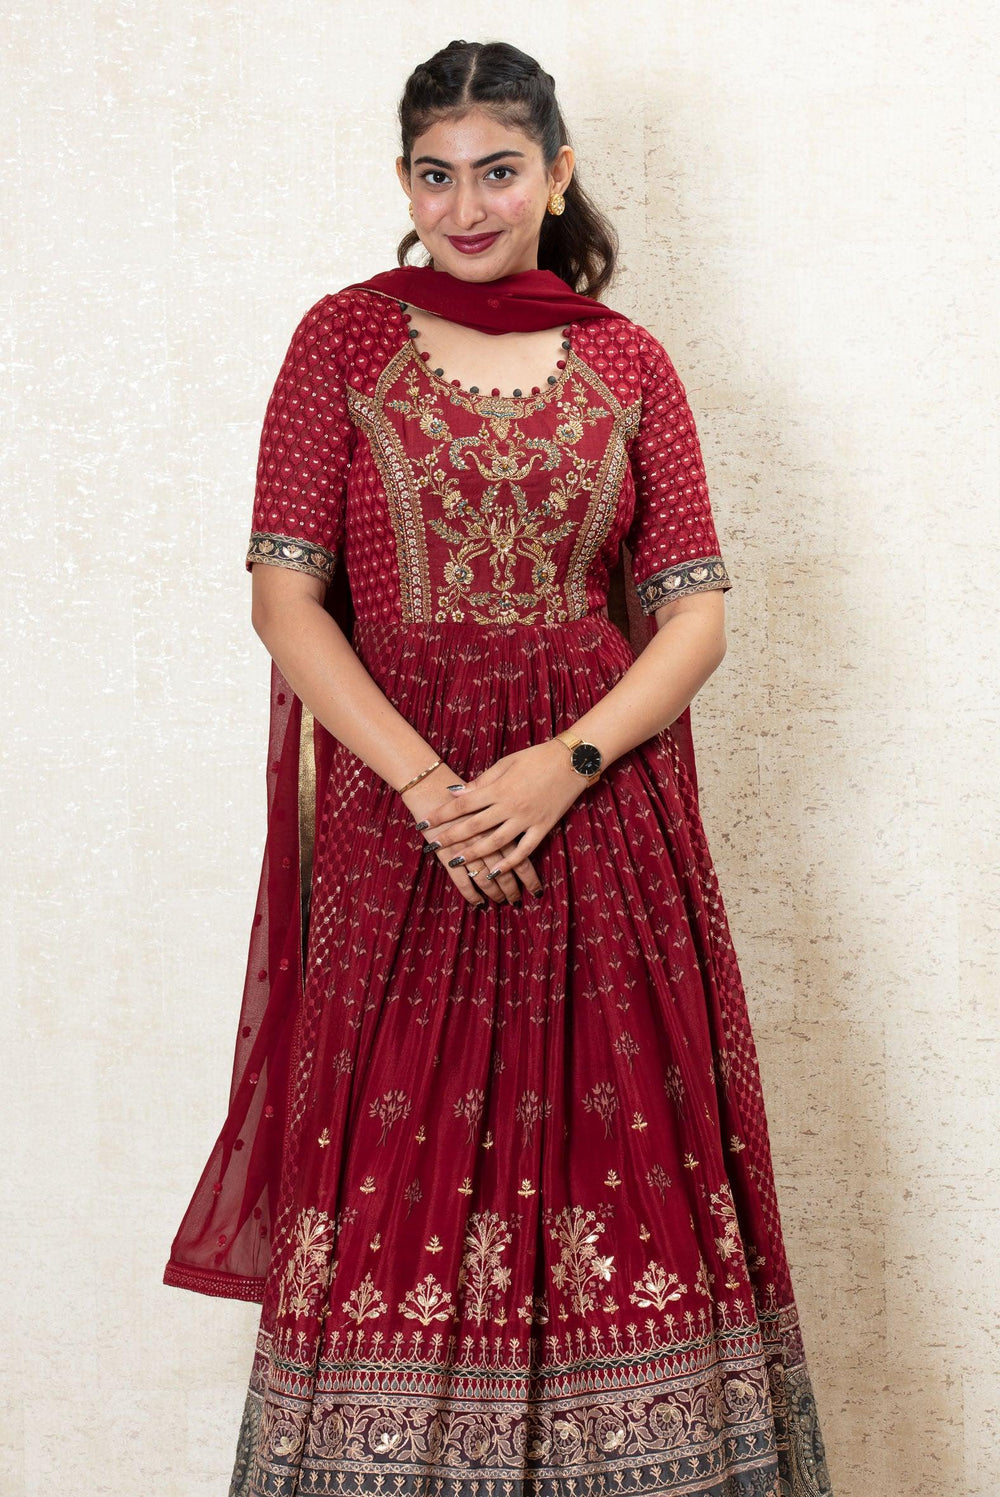 Maroon Beads, Zari, Sequins and Thread work with Printed Floor Length Anarkali Suit - Seasons Chennai